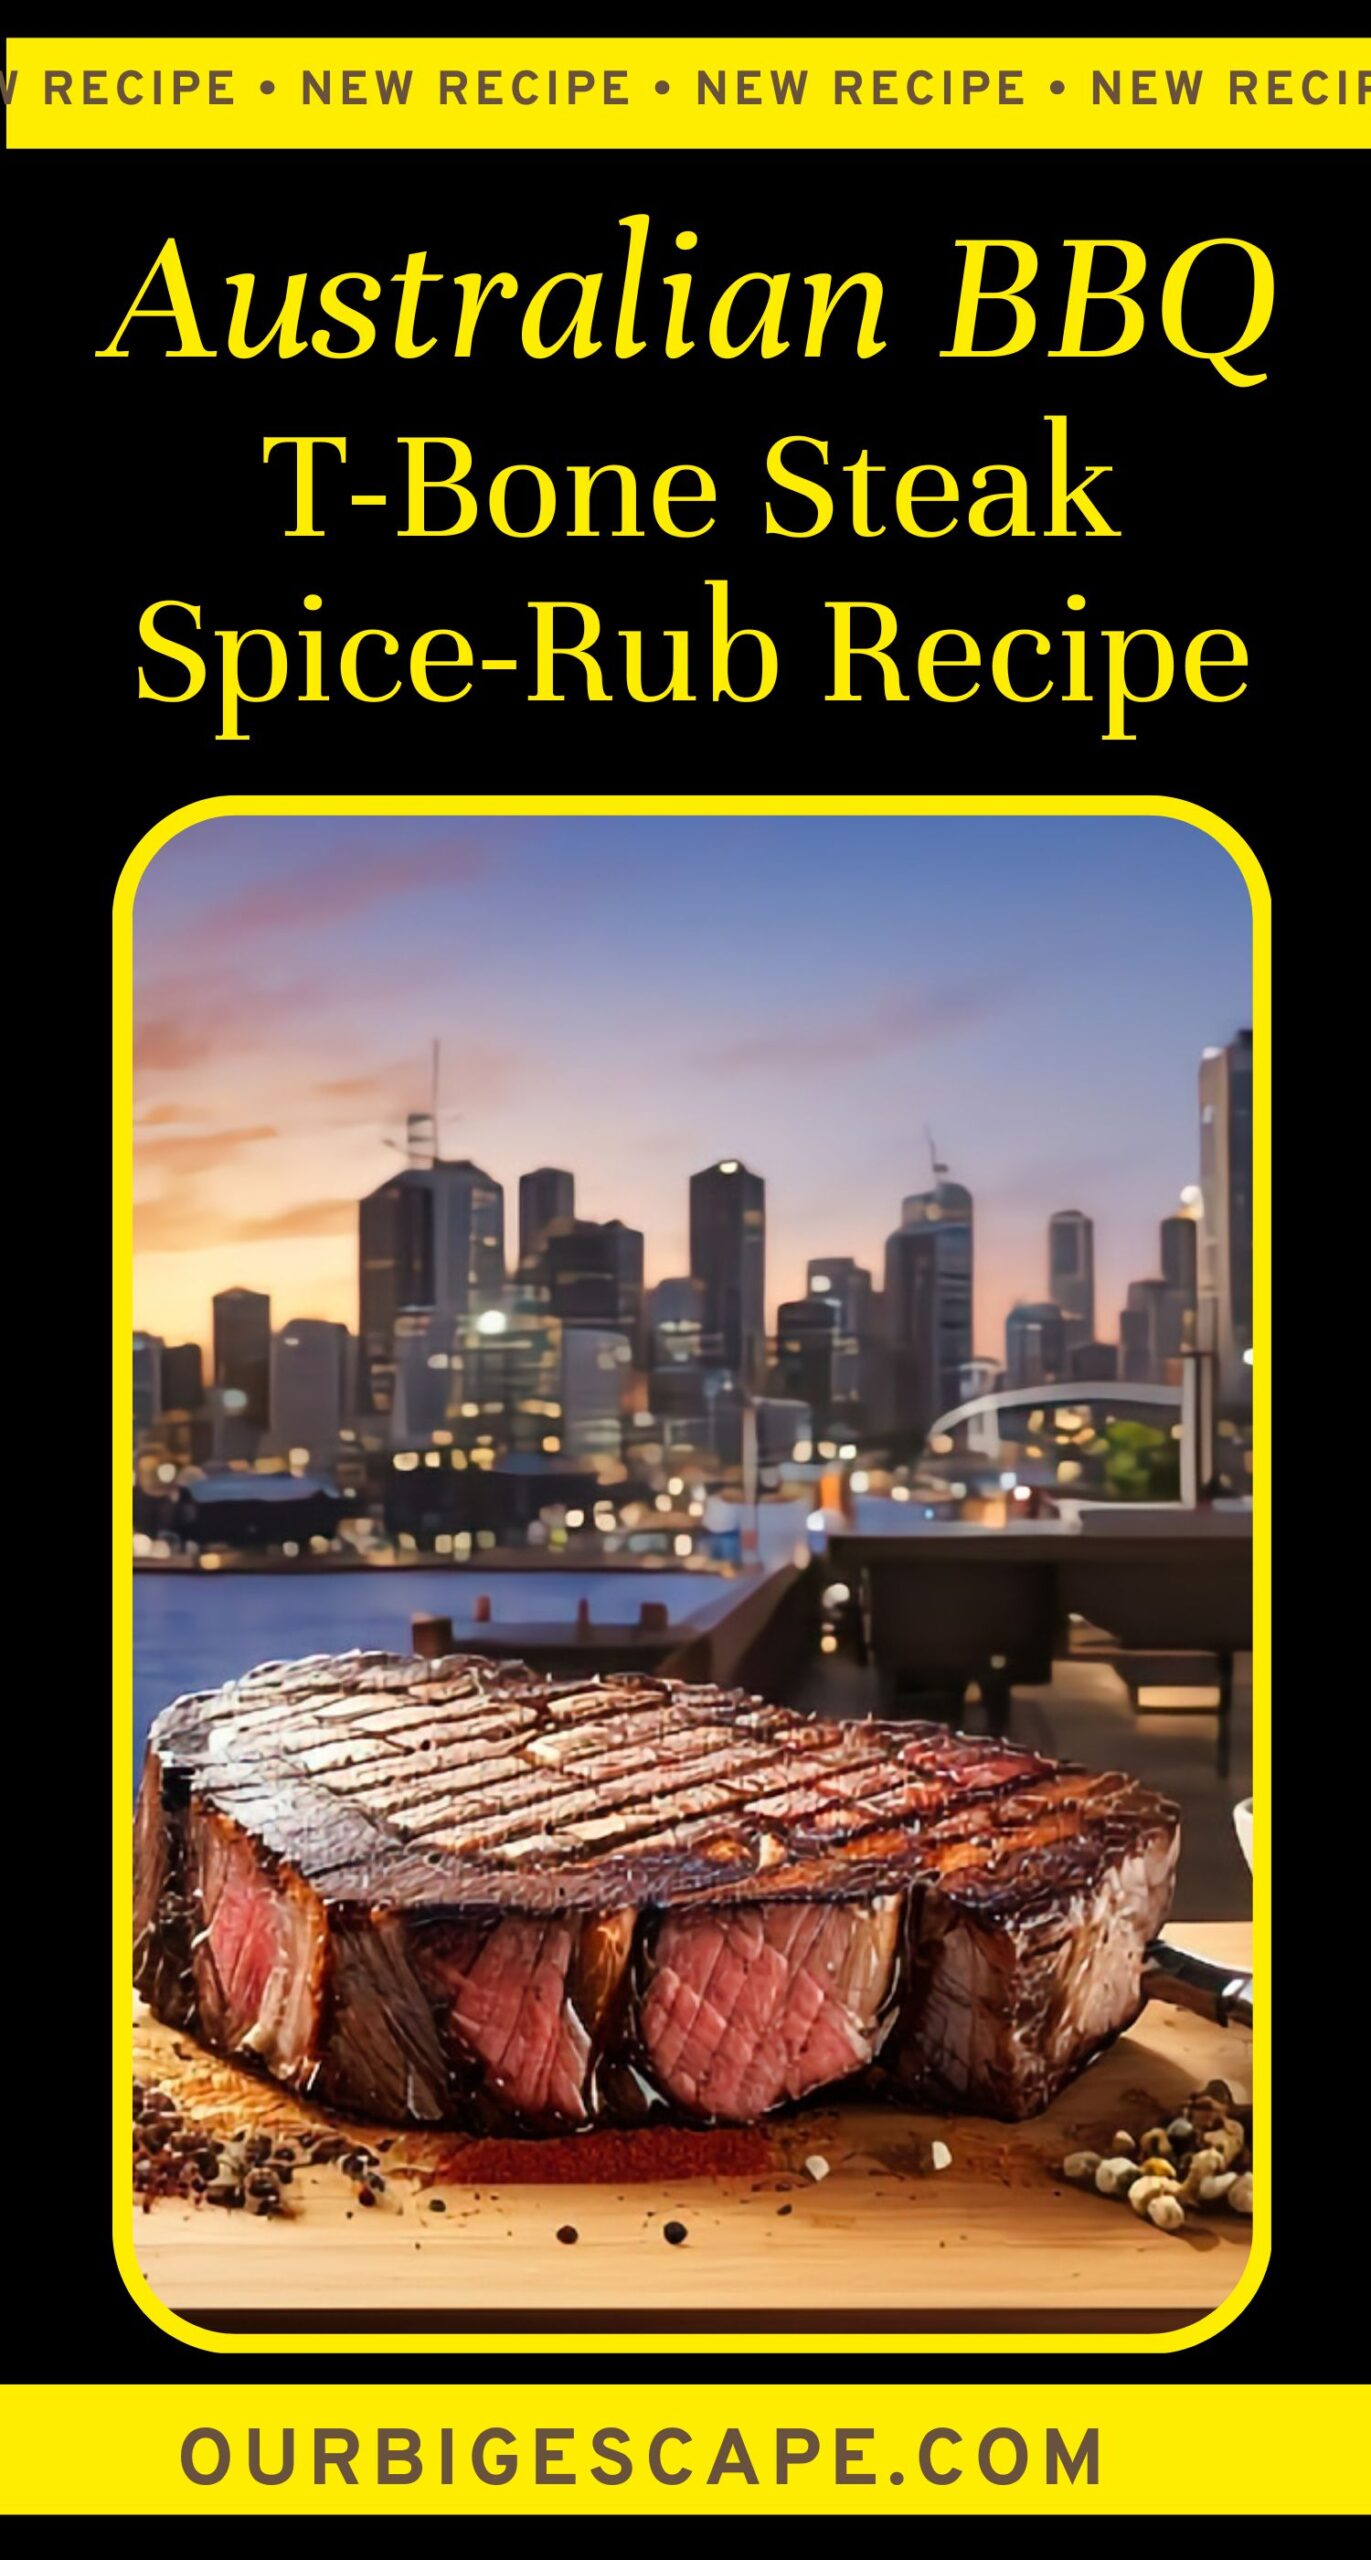 8. Australian BBQ T-Bone Steak Spice-Rub Recipe